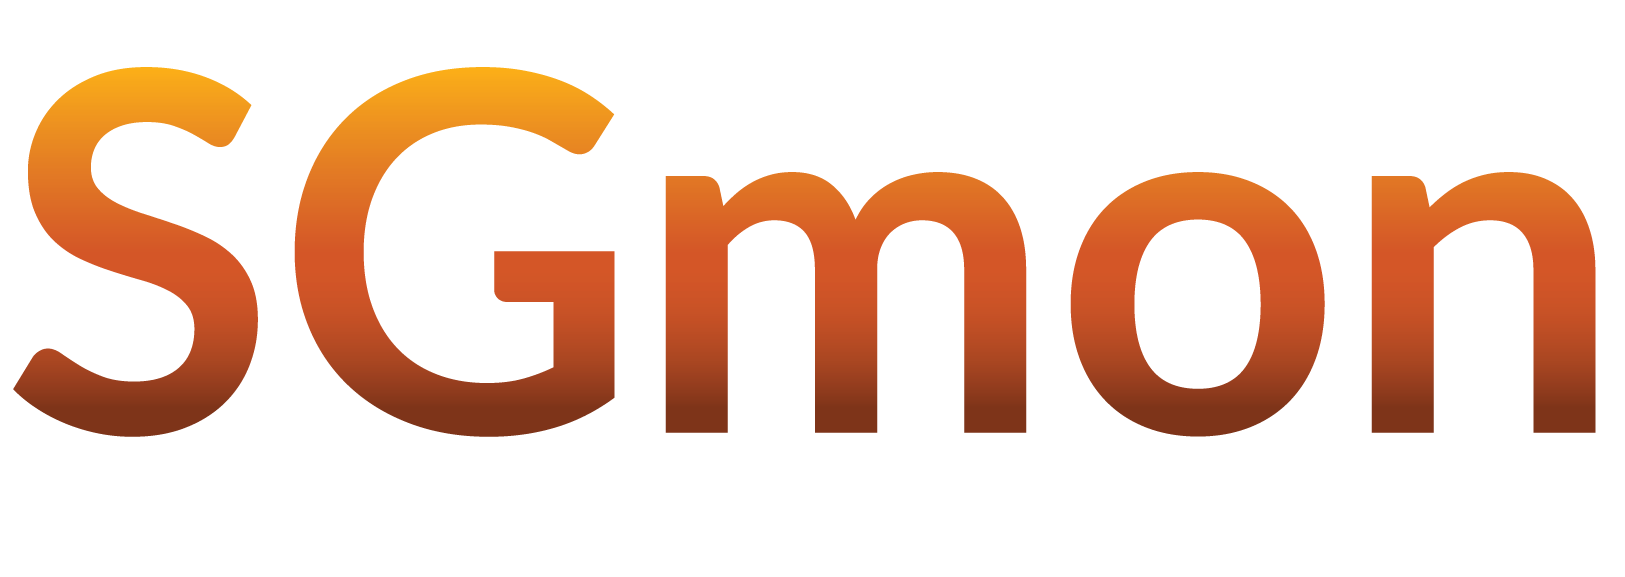 SGmon logo